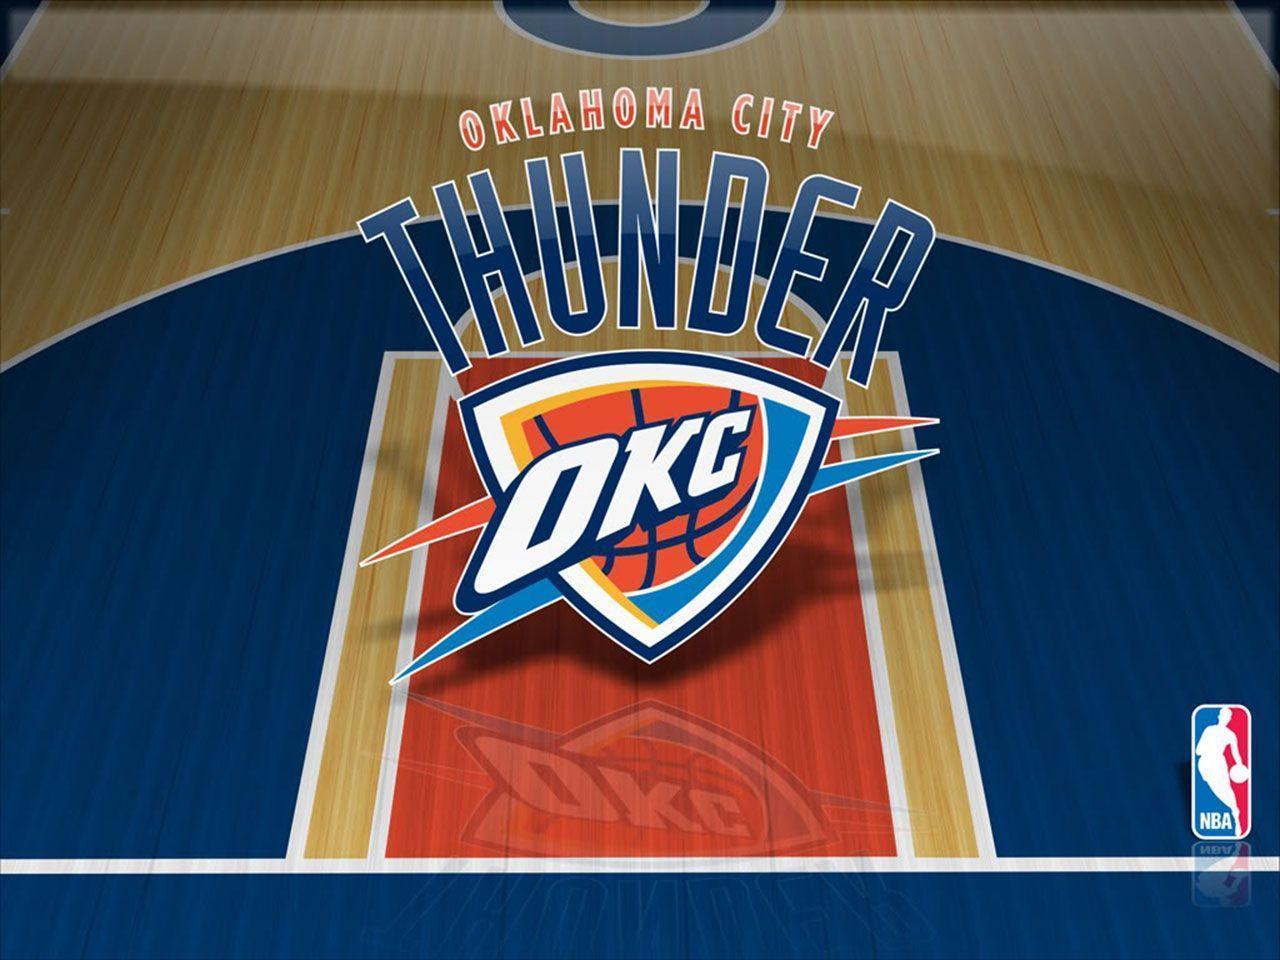 Oklahoma City Thunder Court Wallpaper. Basketball Wallpaper at